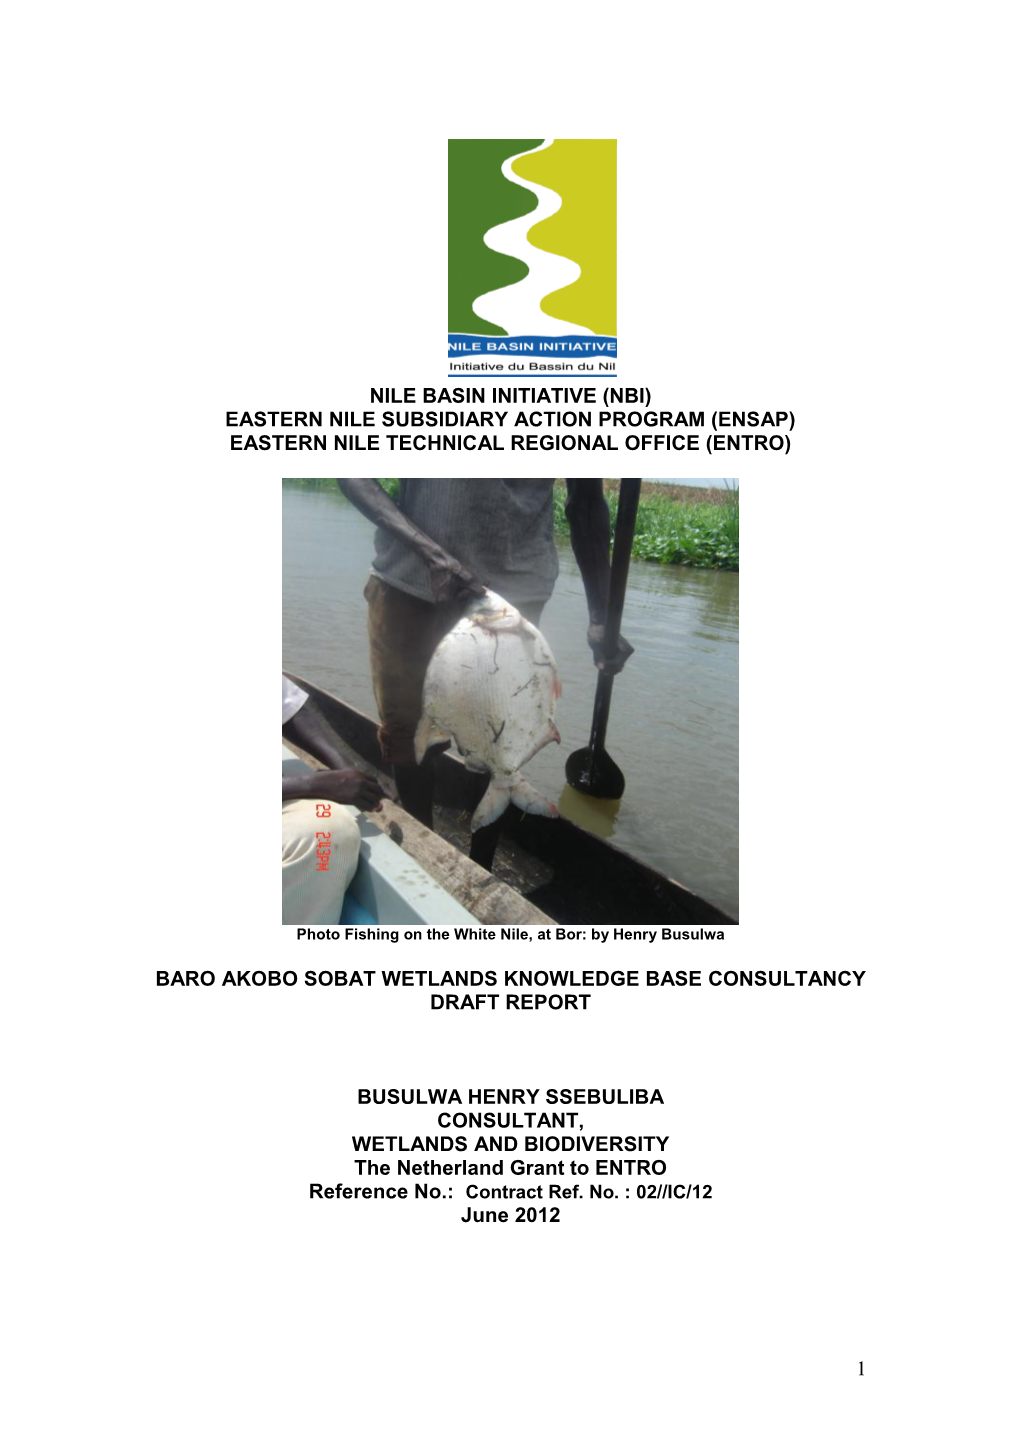 NBI/Nile Basin Initiative (NBI) Eastern Nile Subsidiary Action Program (ENSAP) Eastern Nile Technical Regional Office (ENTRO)